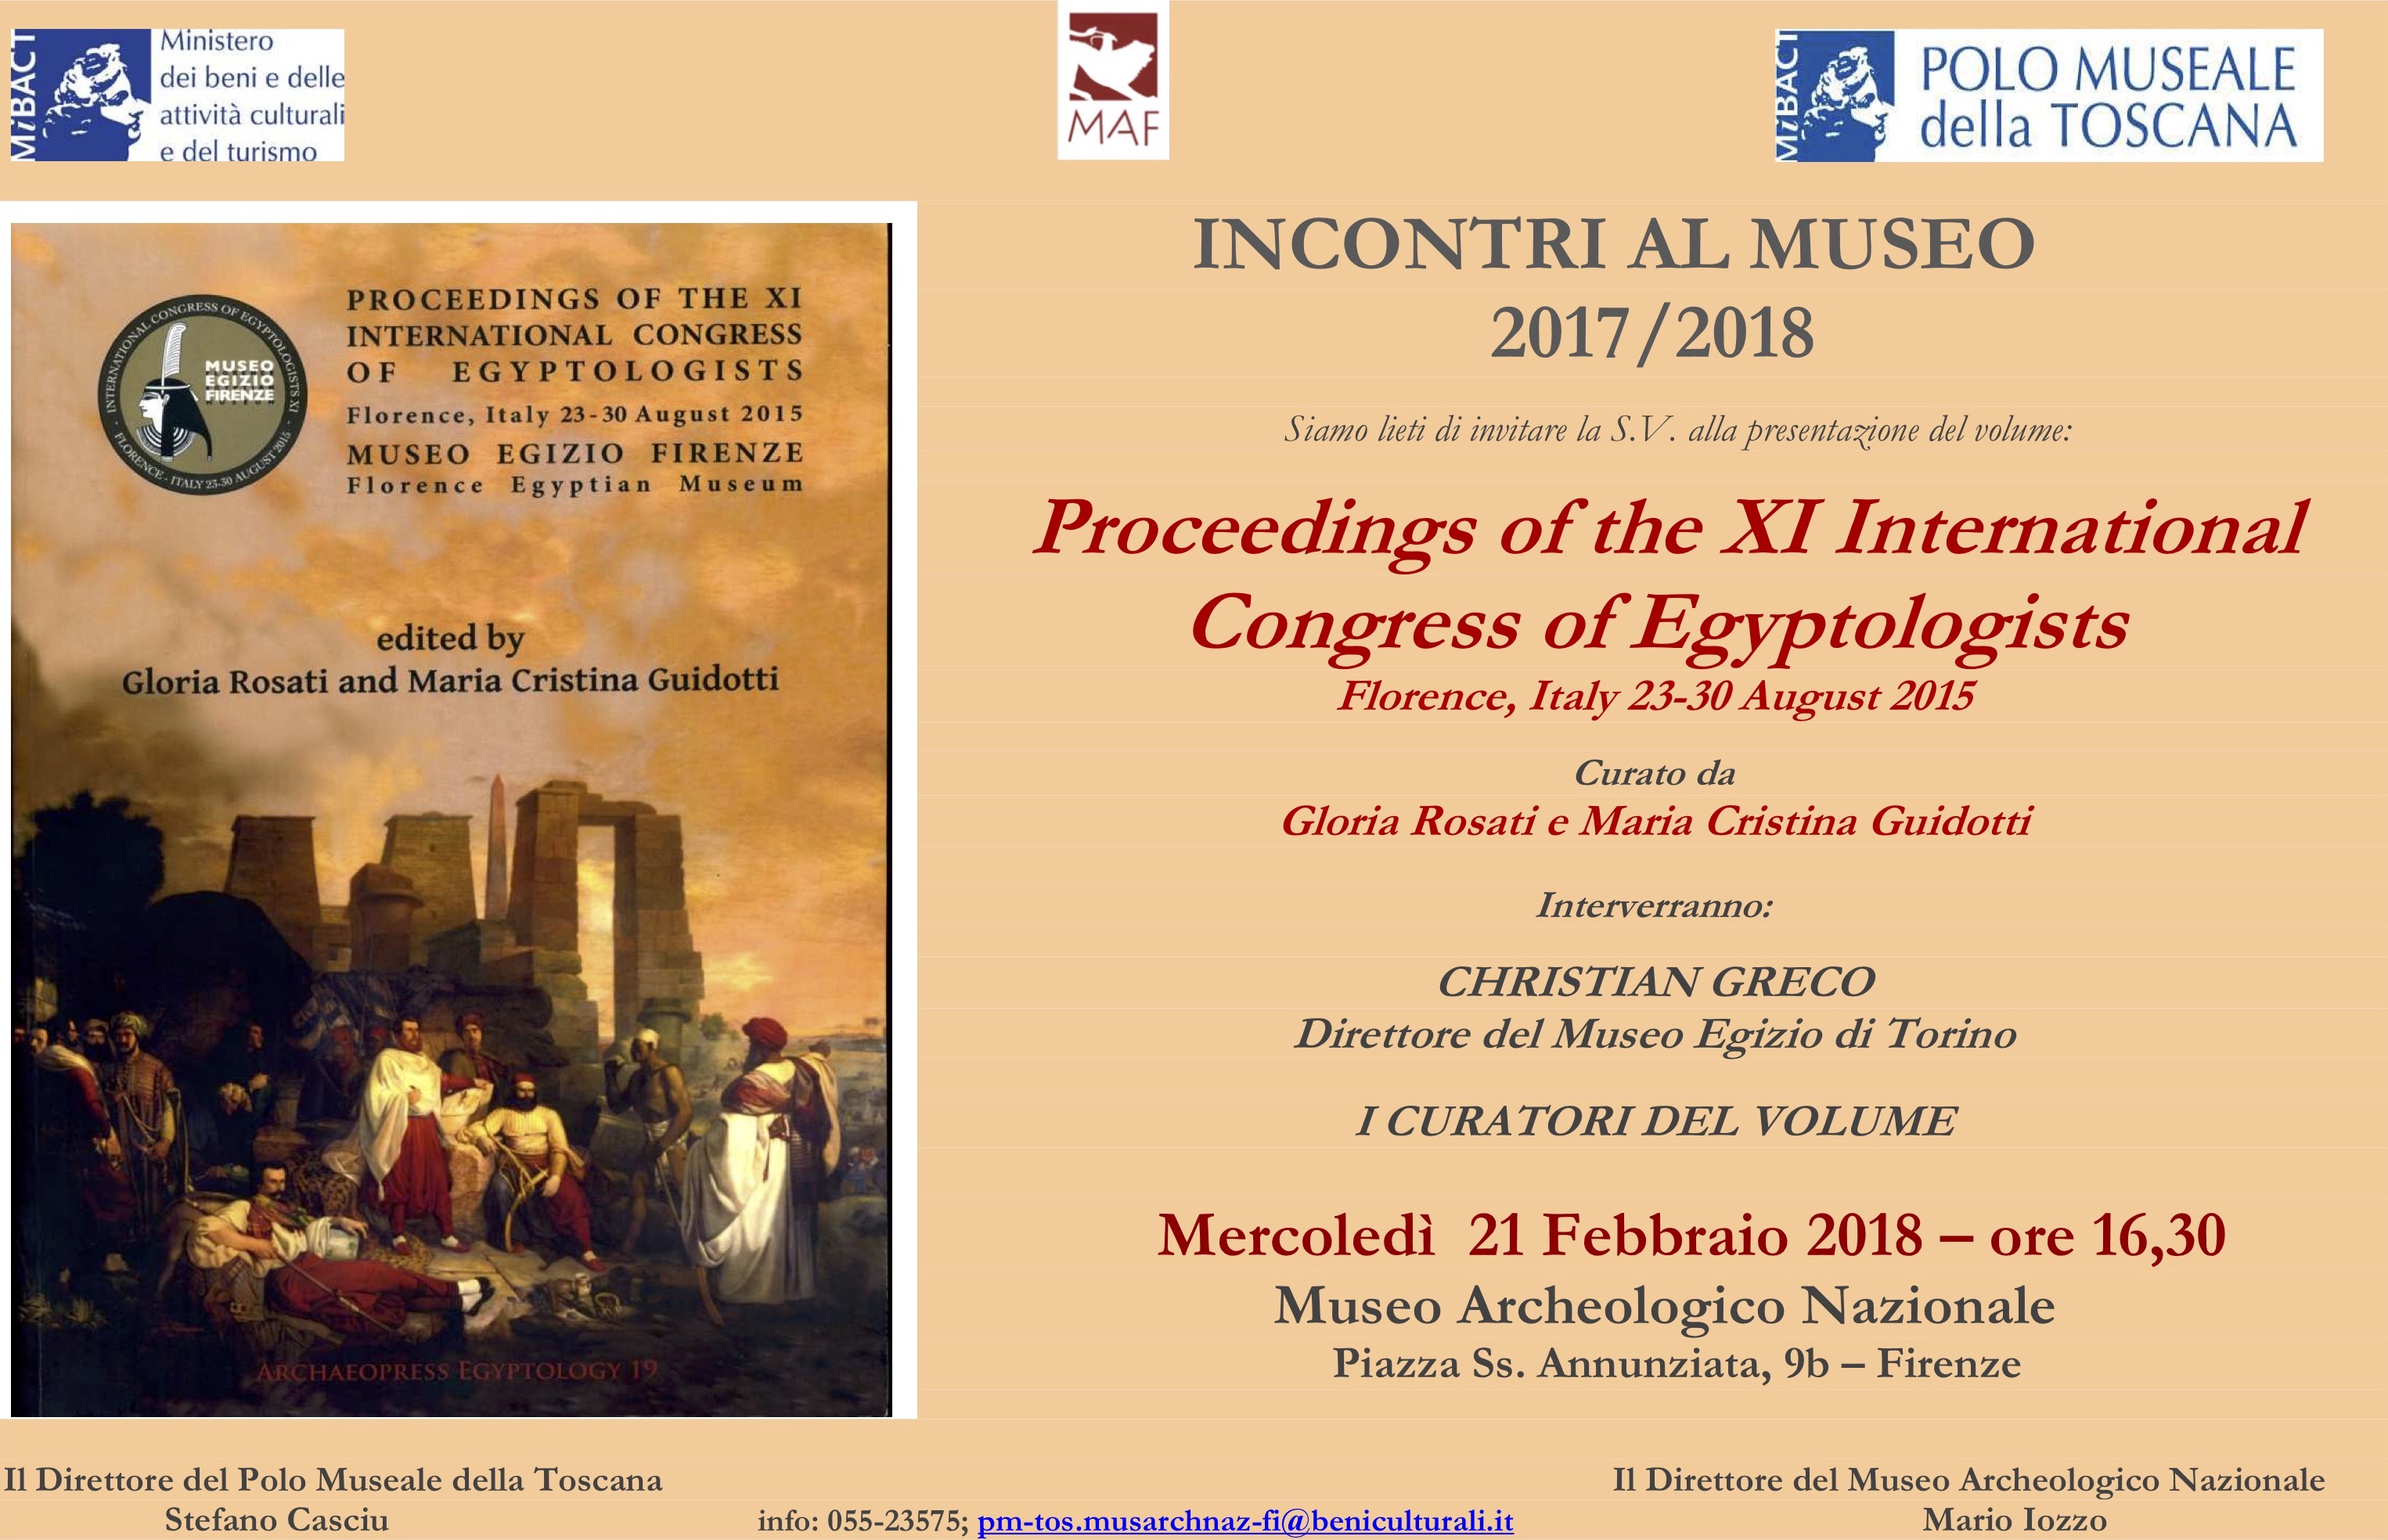 Presentation of the Proceedings of the International Congress of Egyptologists XI